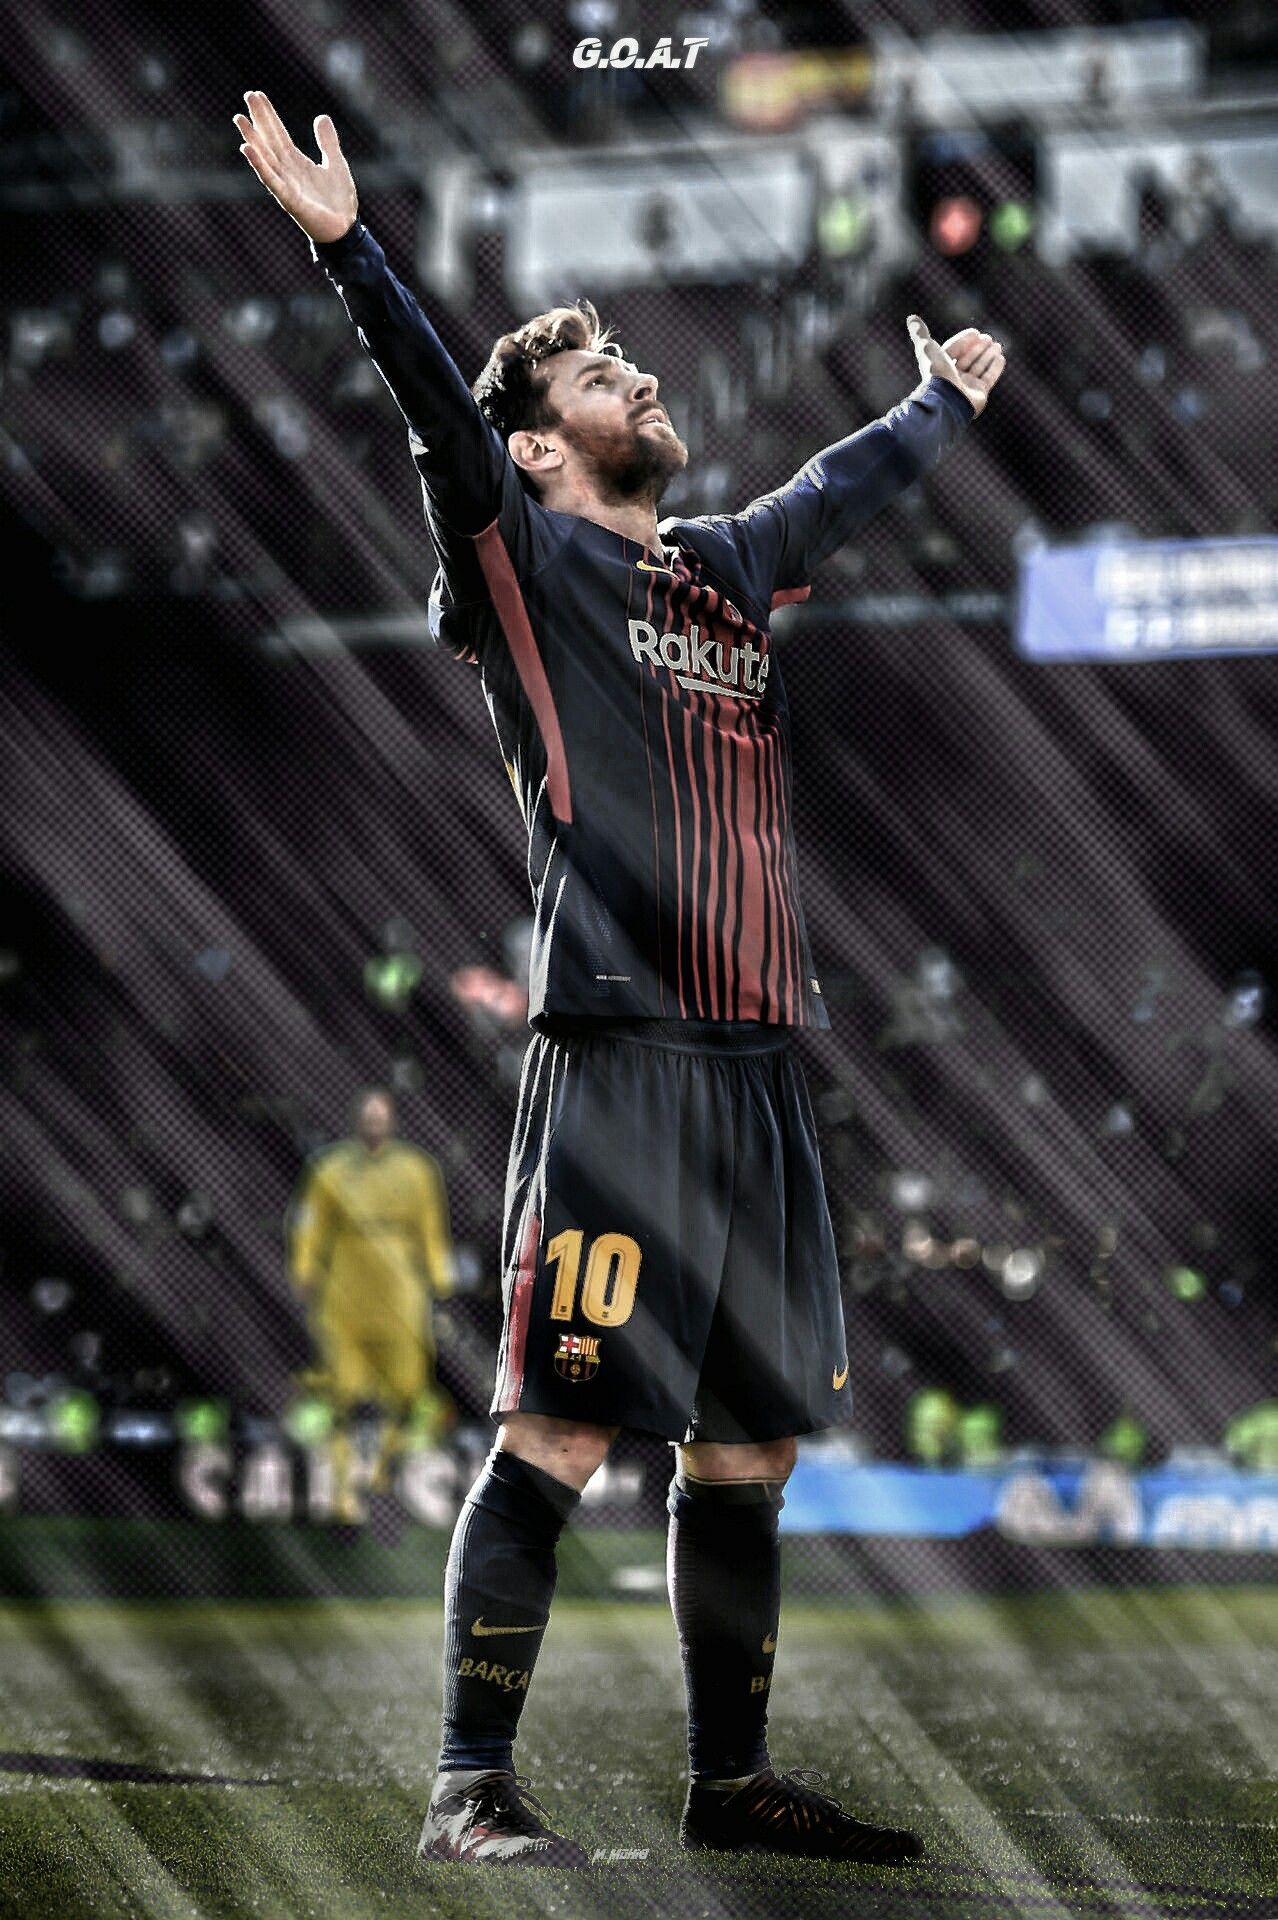 Lionel Messi Goat Wallpaper